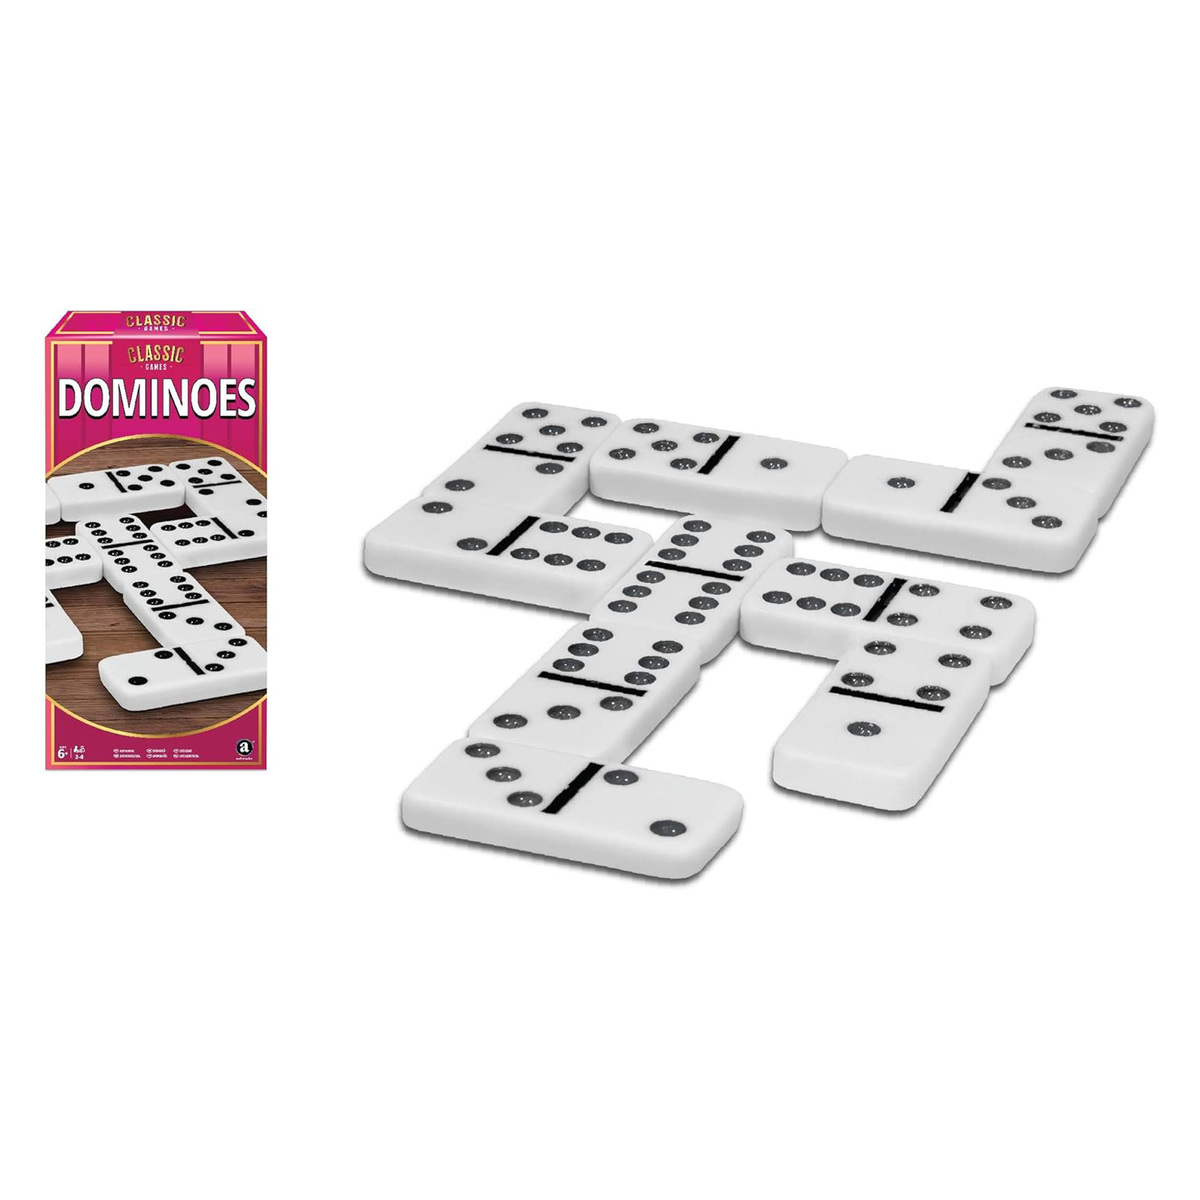 Ambassador Classic Game Dominoes, ST2205